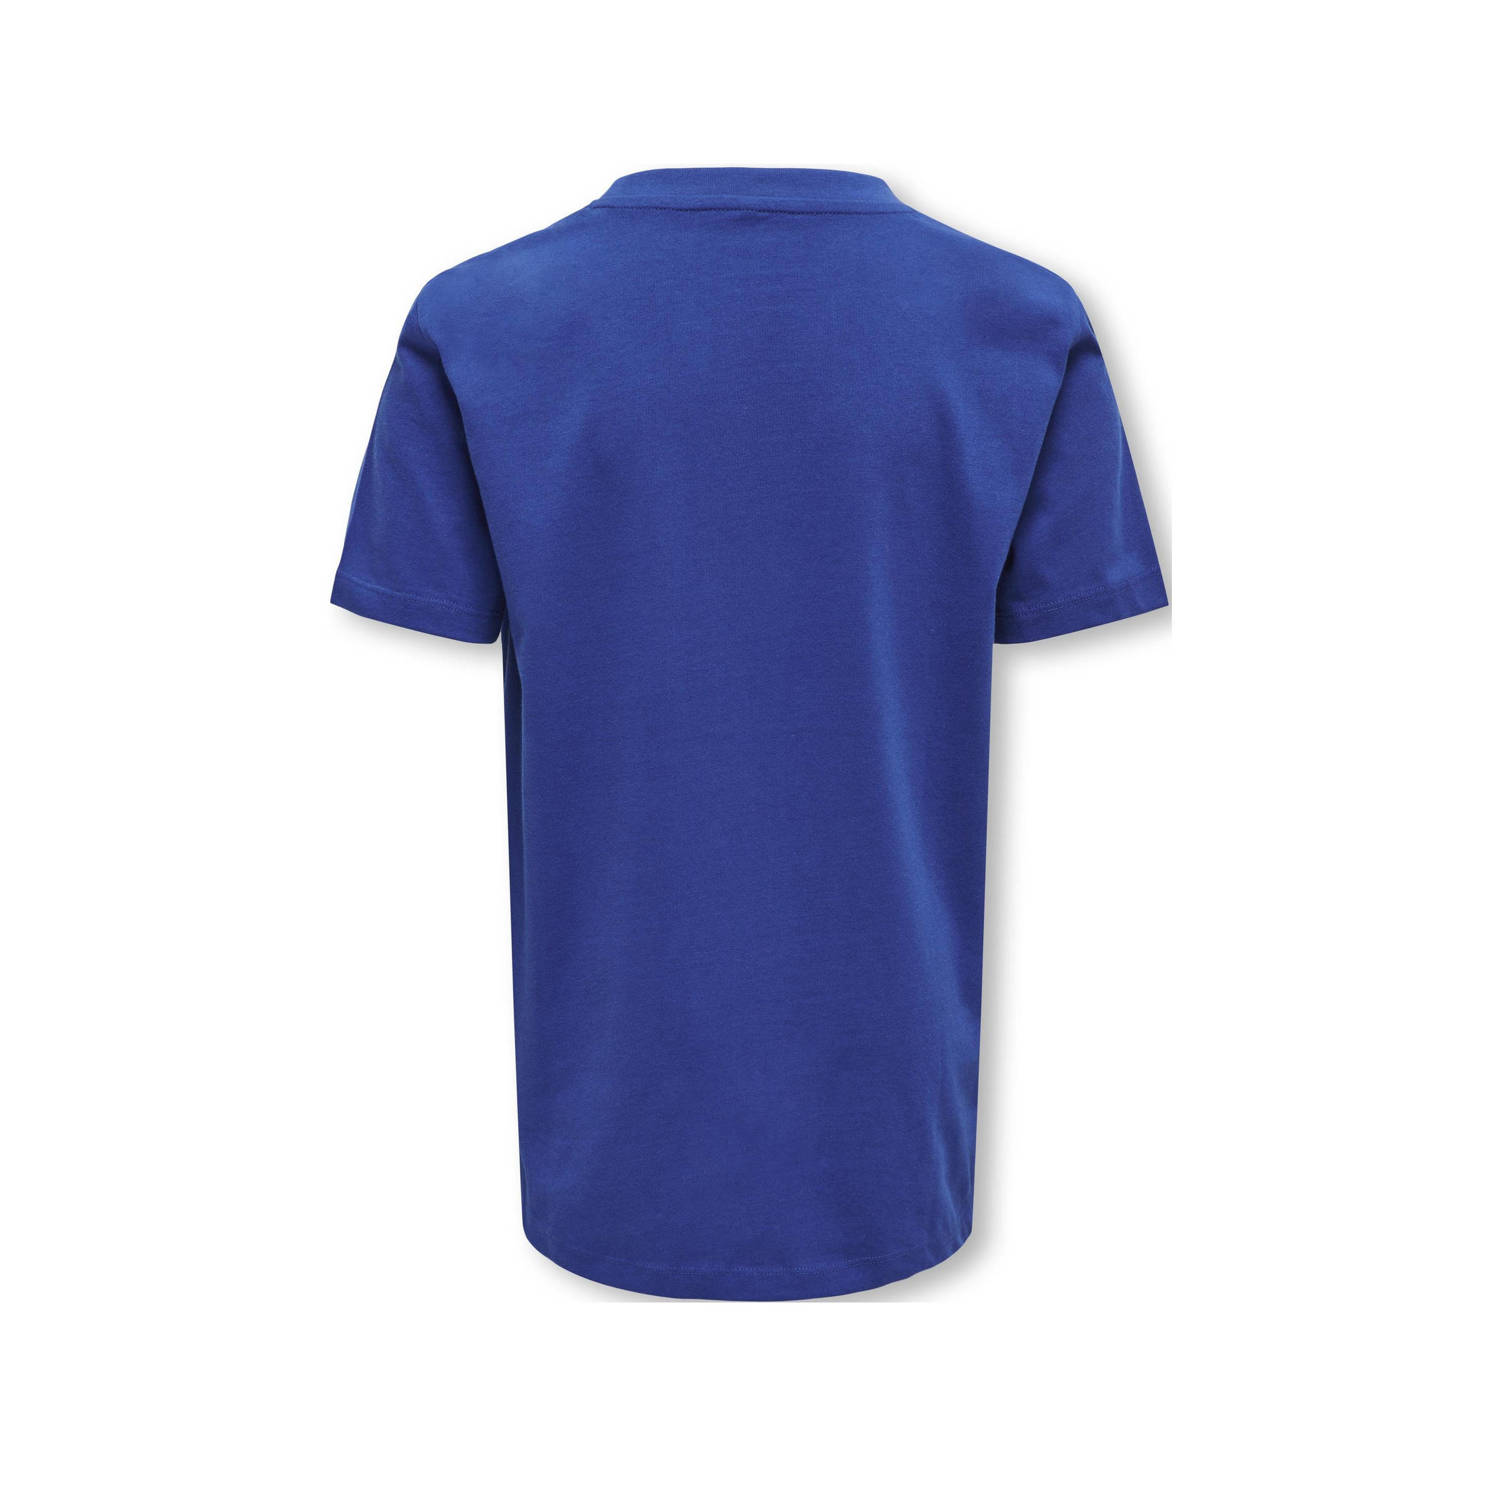 ONLY KIDS BOY T-shirt KOBMARINUS met tekst hardblauw